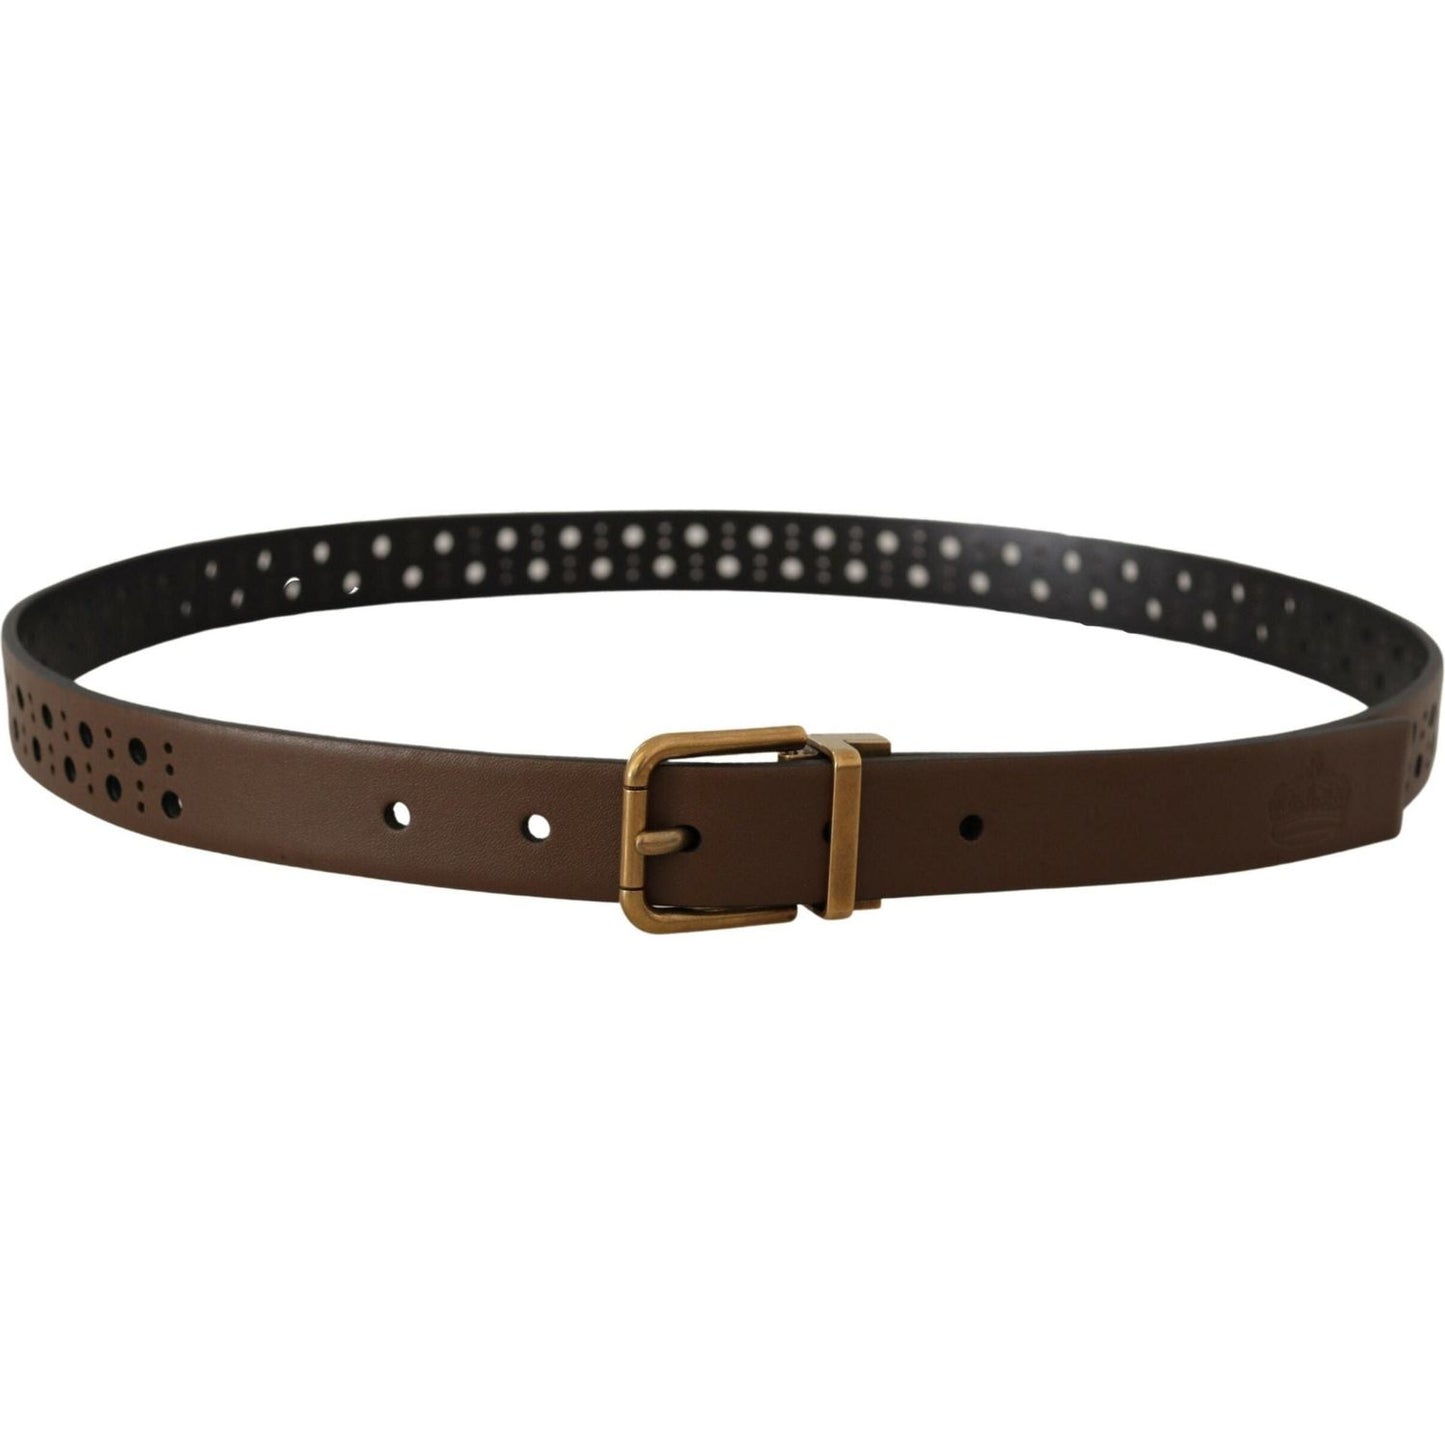 Elegant Brown Leather Belt with Golden Buckle